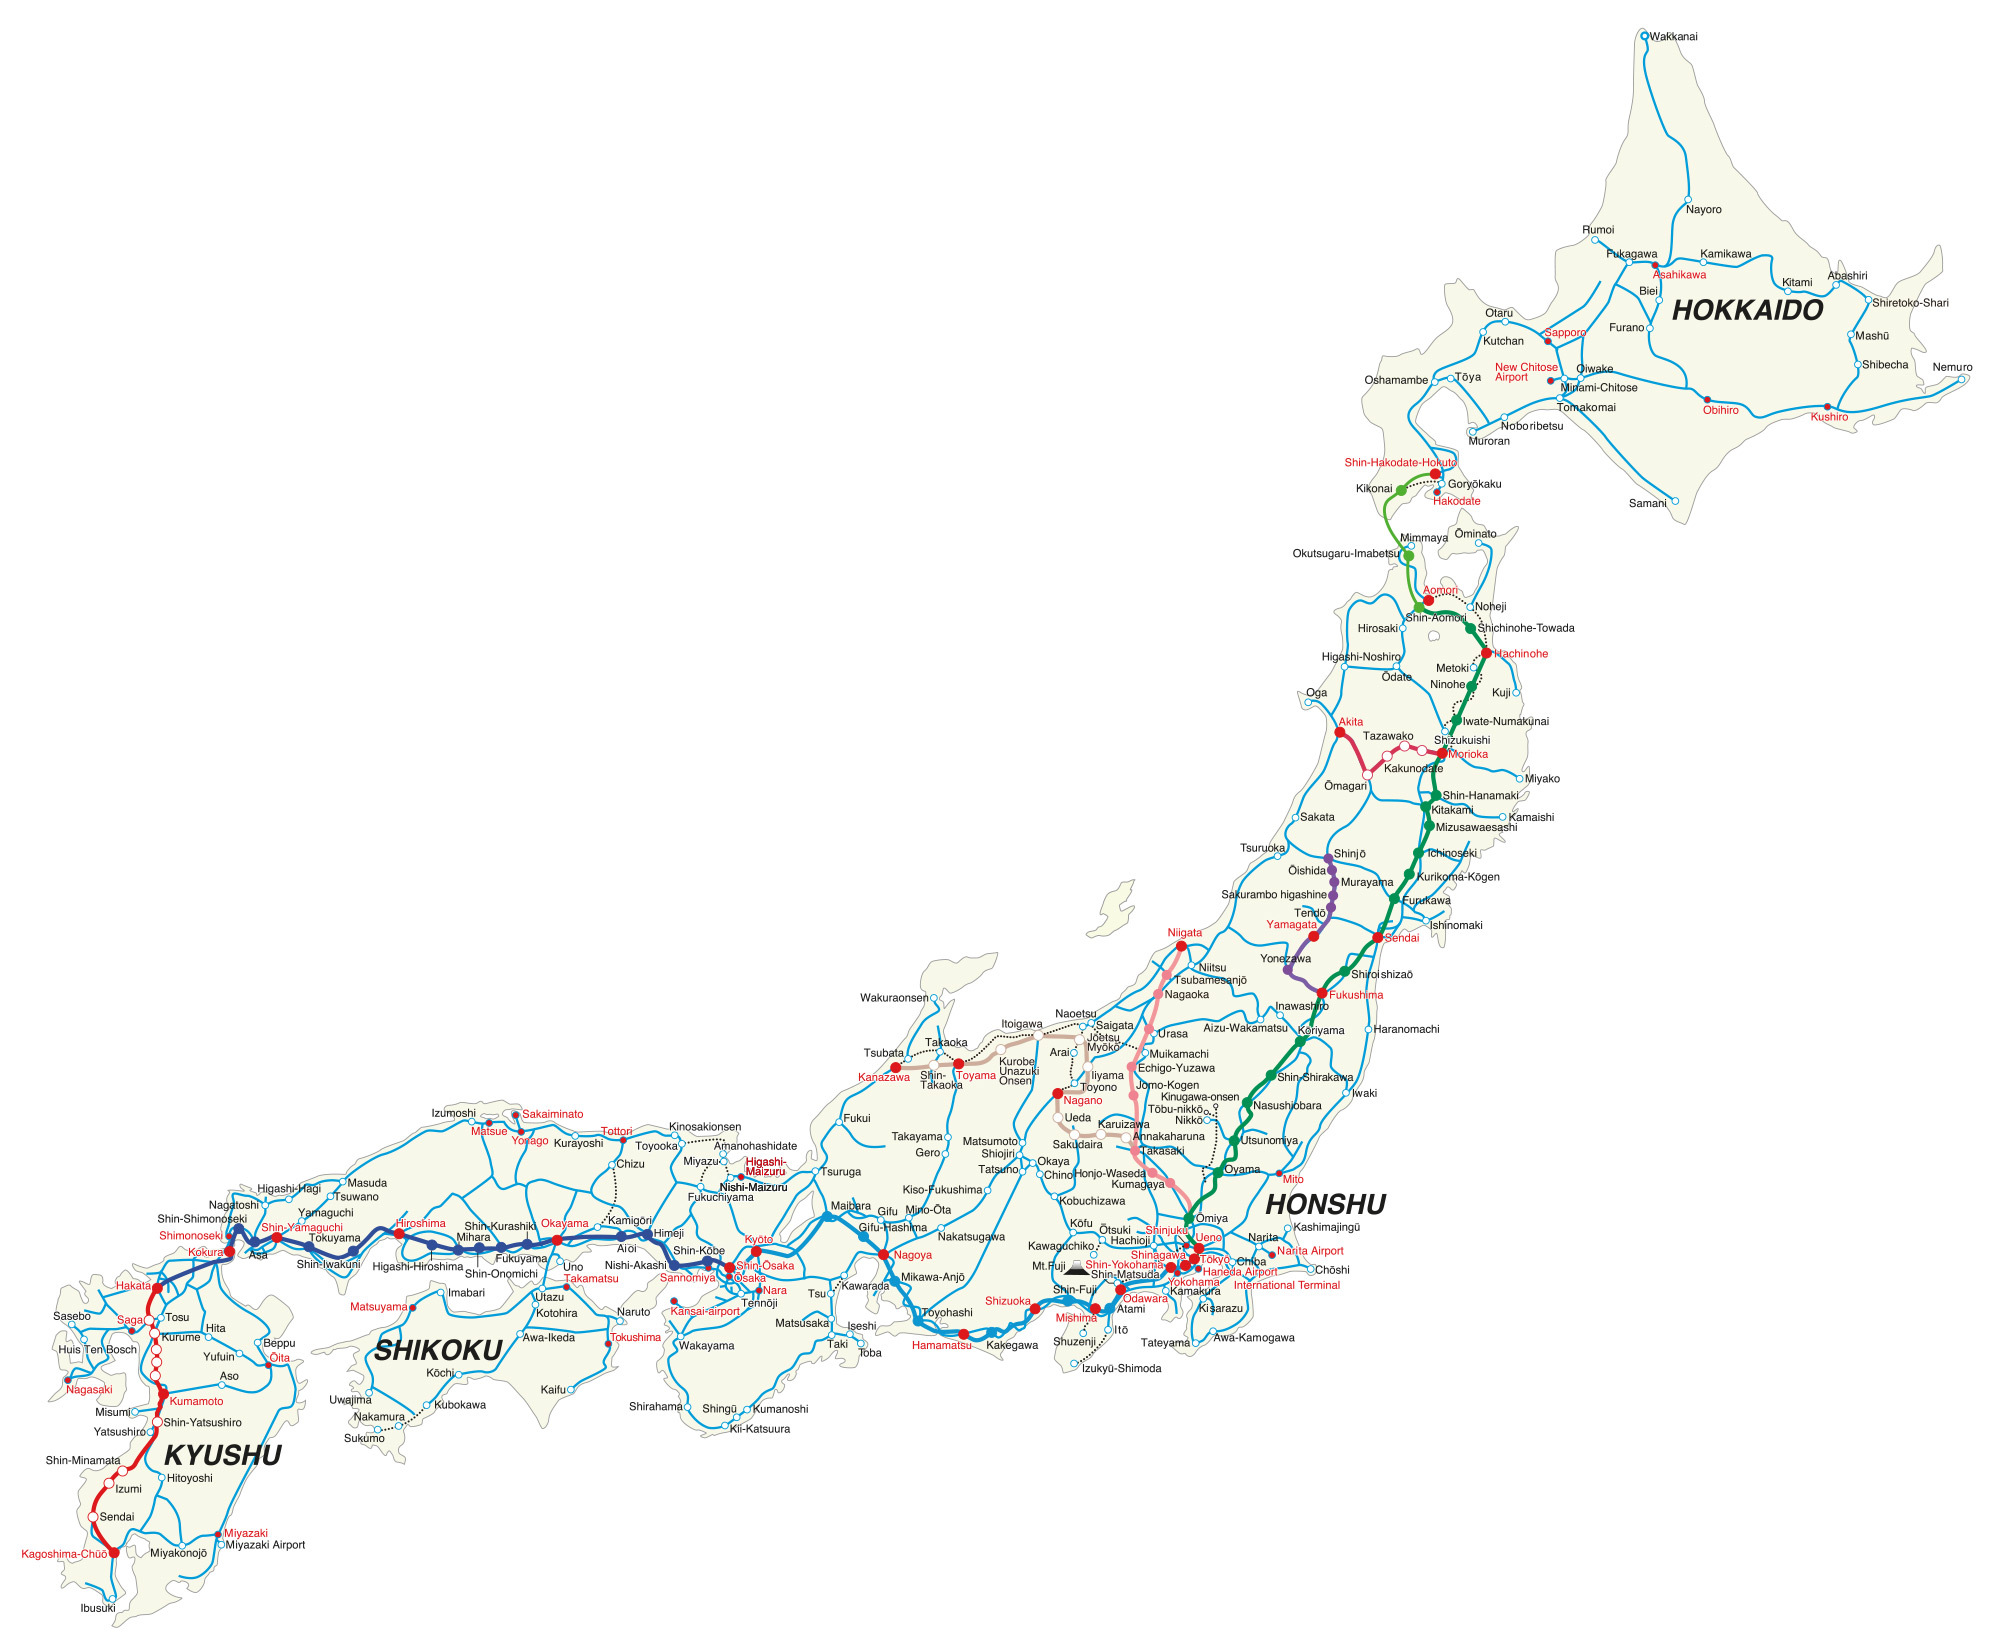 JR Trains network in Japan